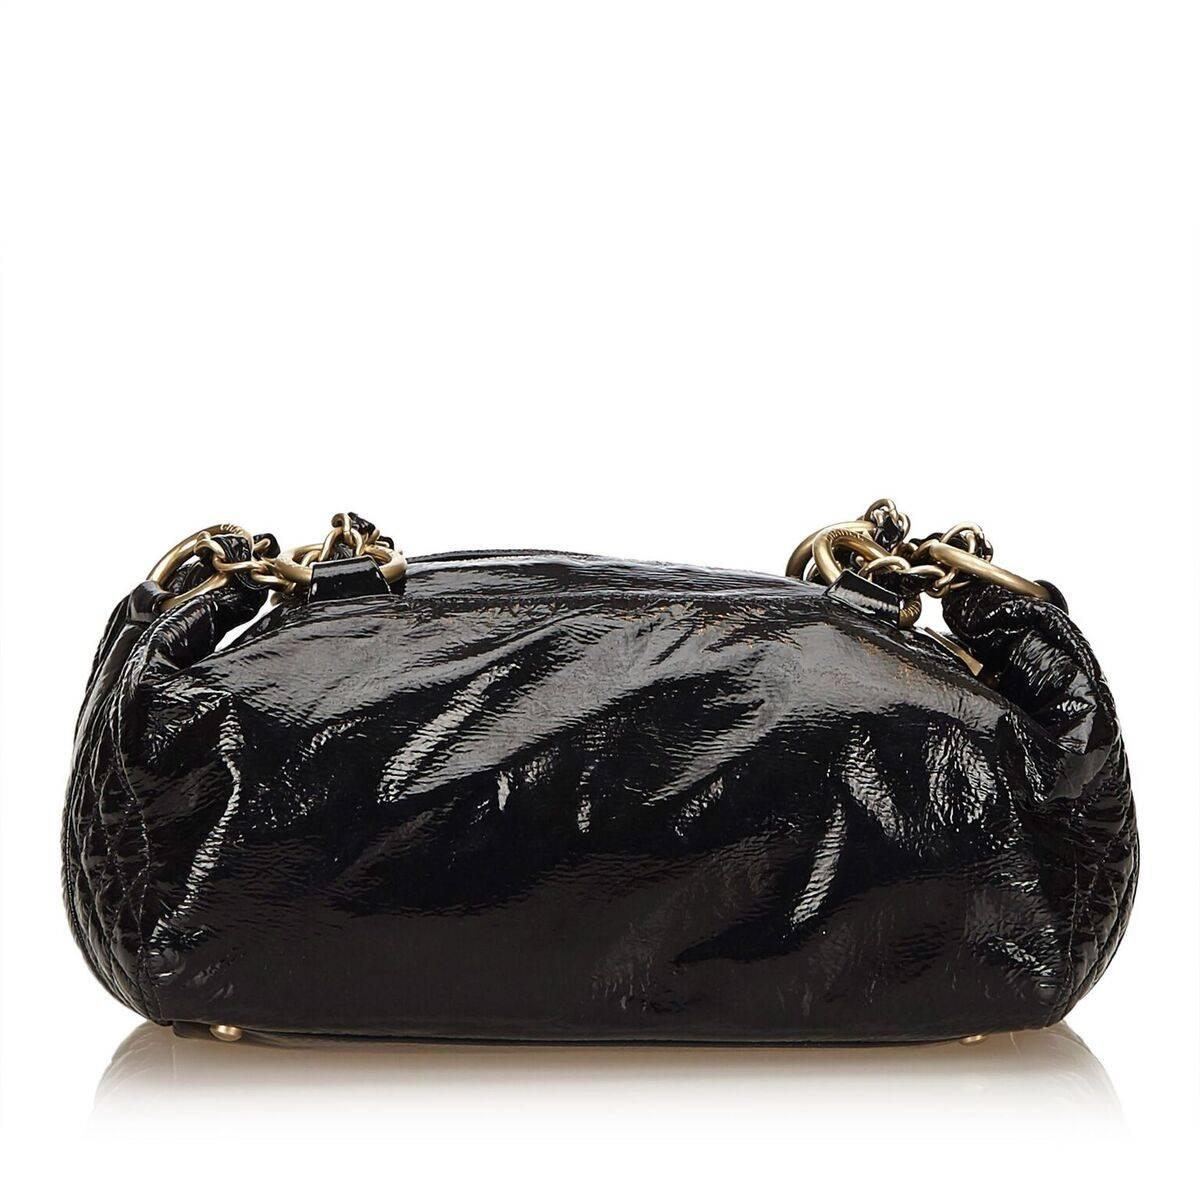 Women's Black Chanel Patent Leather Shoulder Bag